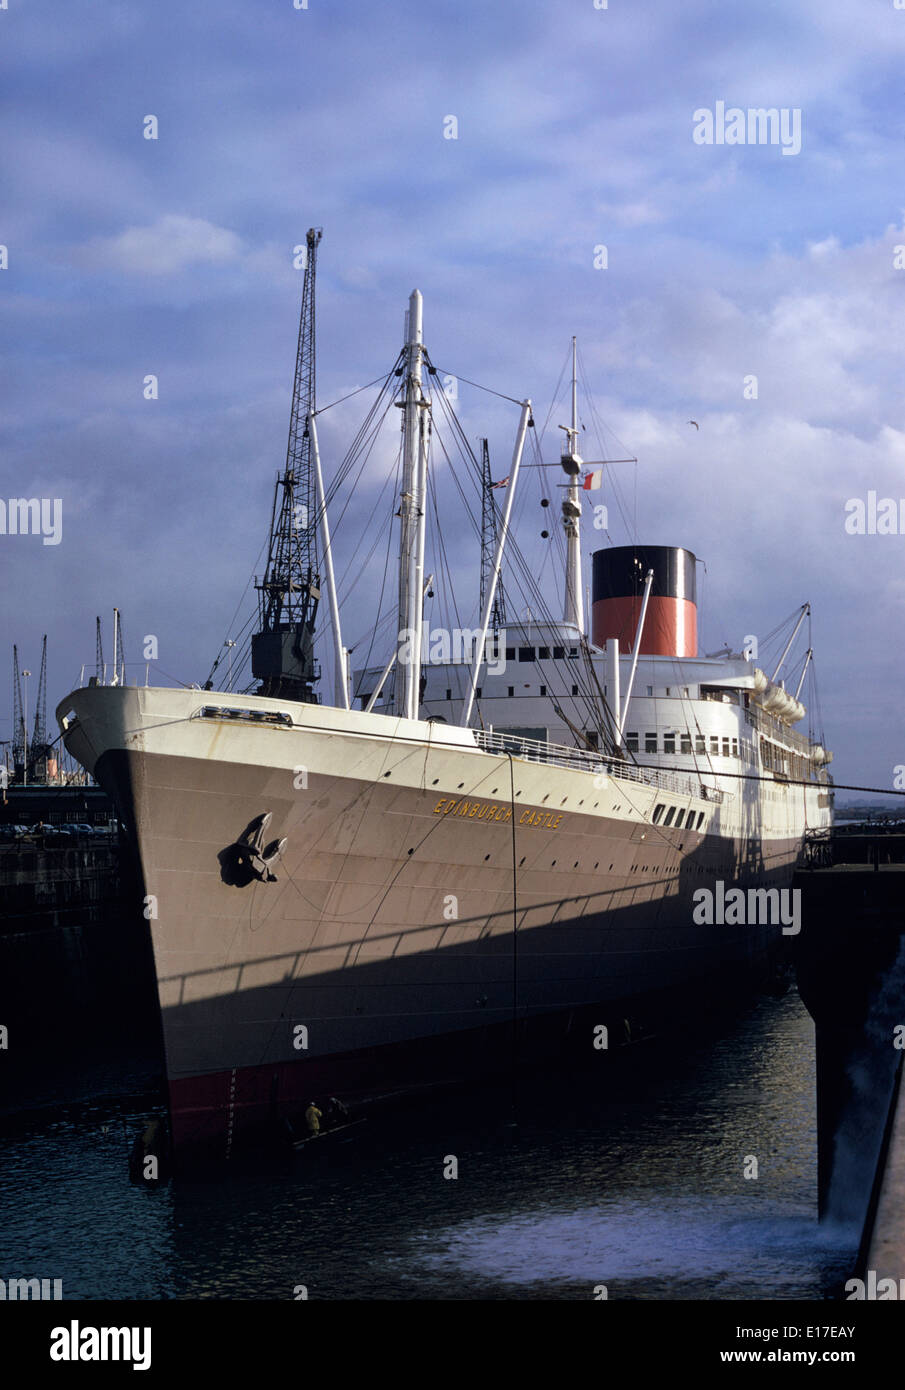 NOV 1973. SOUTHAMPTON, ENGLAND-DRY DOCKING FOR CAPE MAIL SHIP- UNION CASTLE LINER EDINBURGH CASTLE IN KGV DRY DOCK. Stock Photo